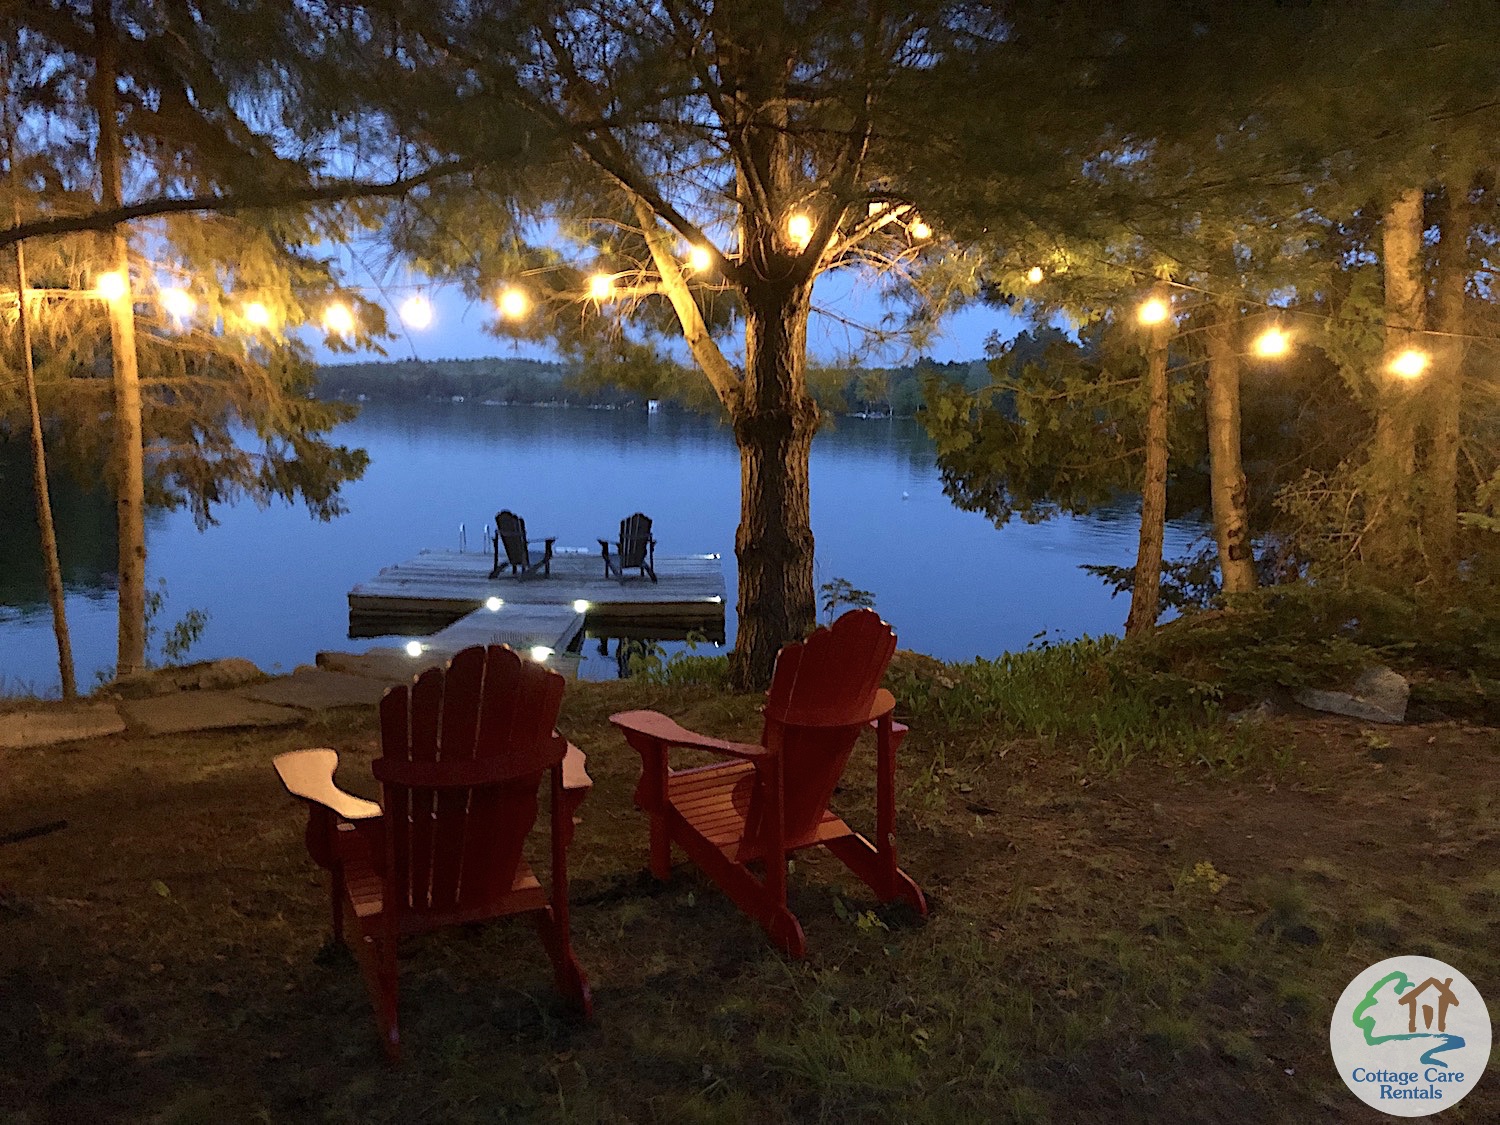 South Lake Sanctuary - Lakeview at dusk